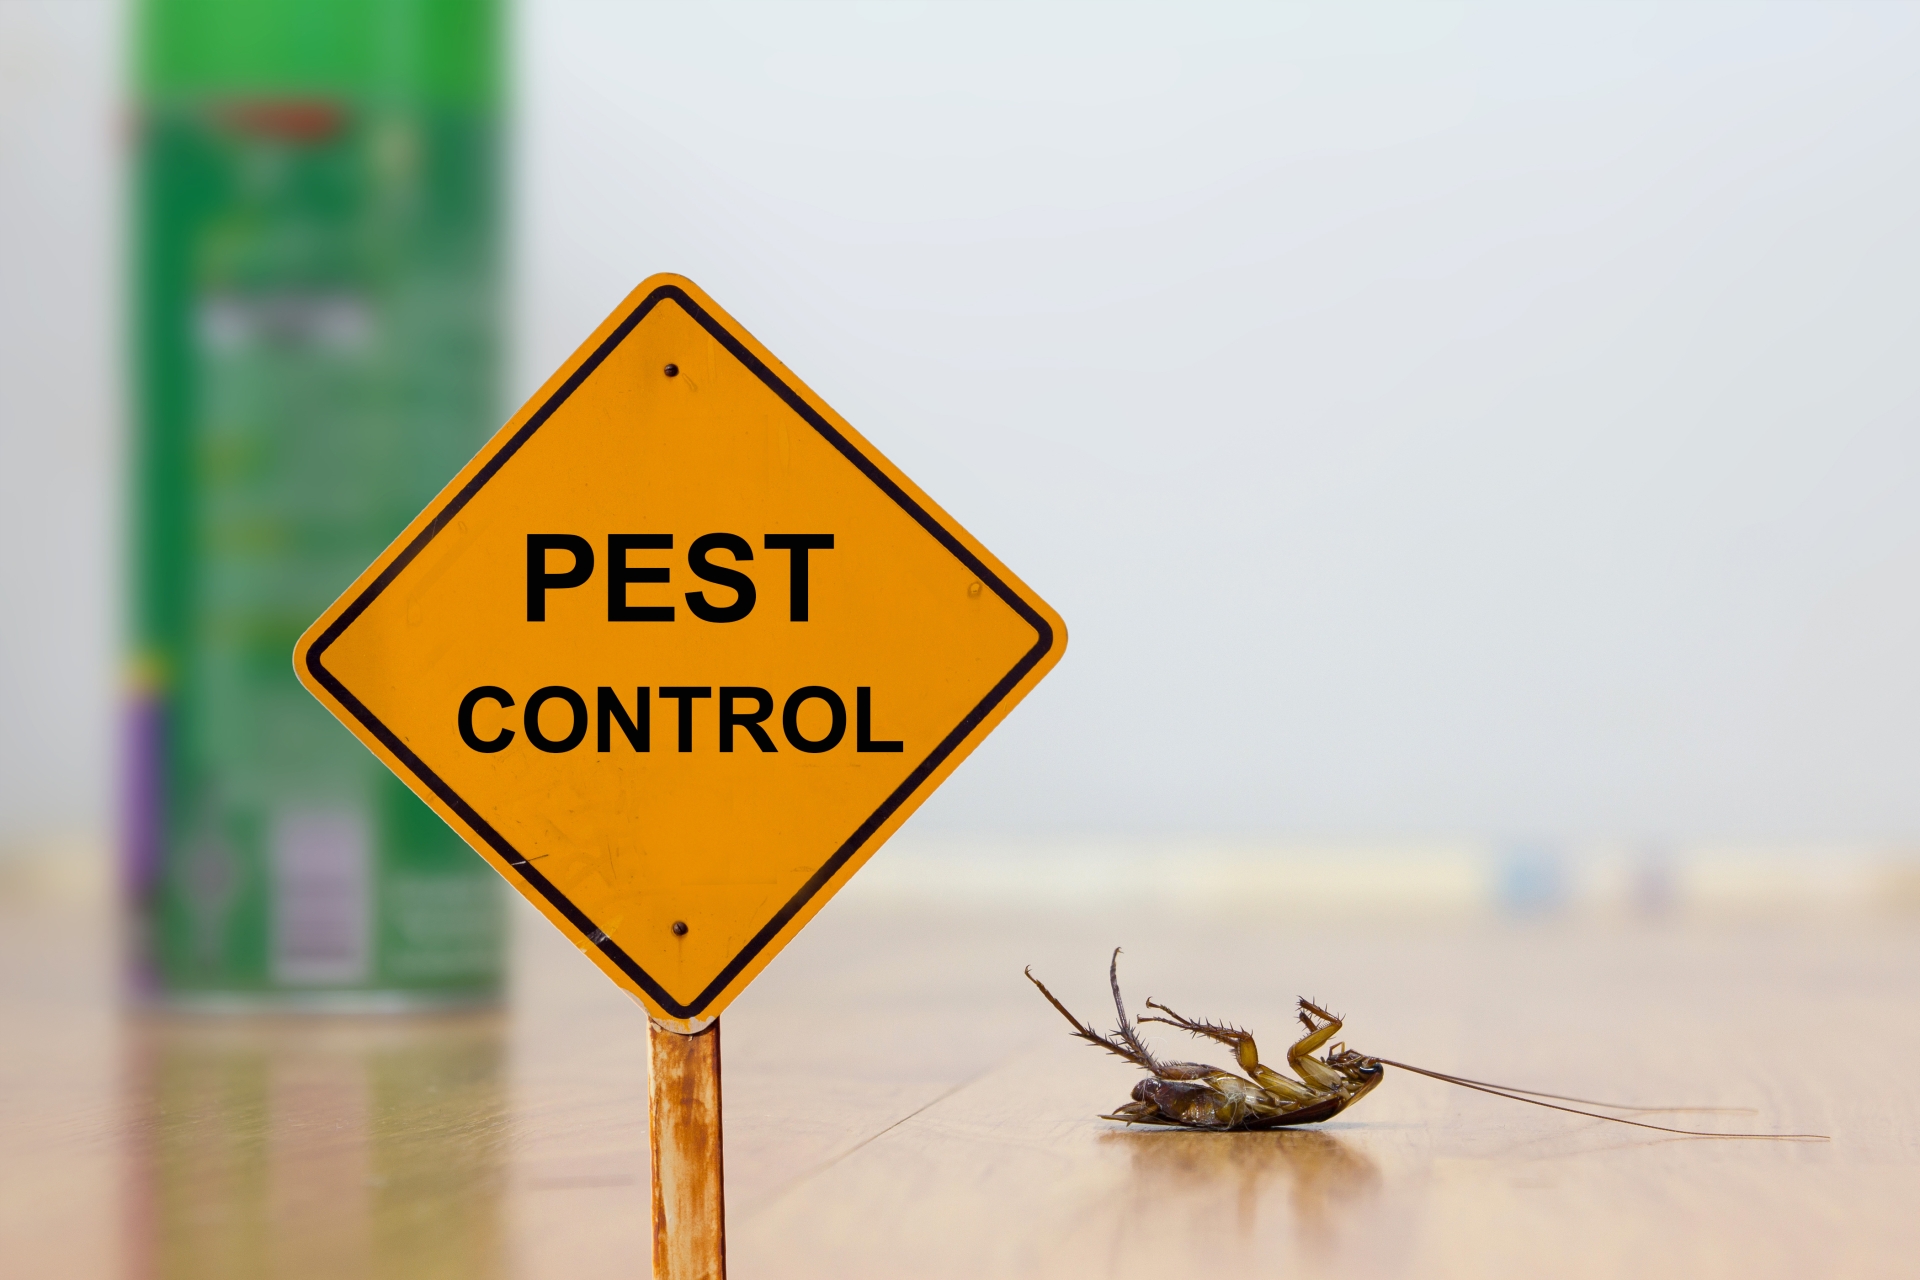 24 Hour Pest Control, Pest Control in Ladbroke Grove, North Kensington, W10. Call Now 020 8166 9746